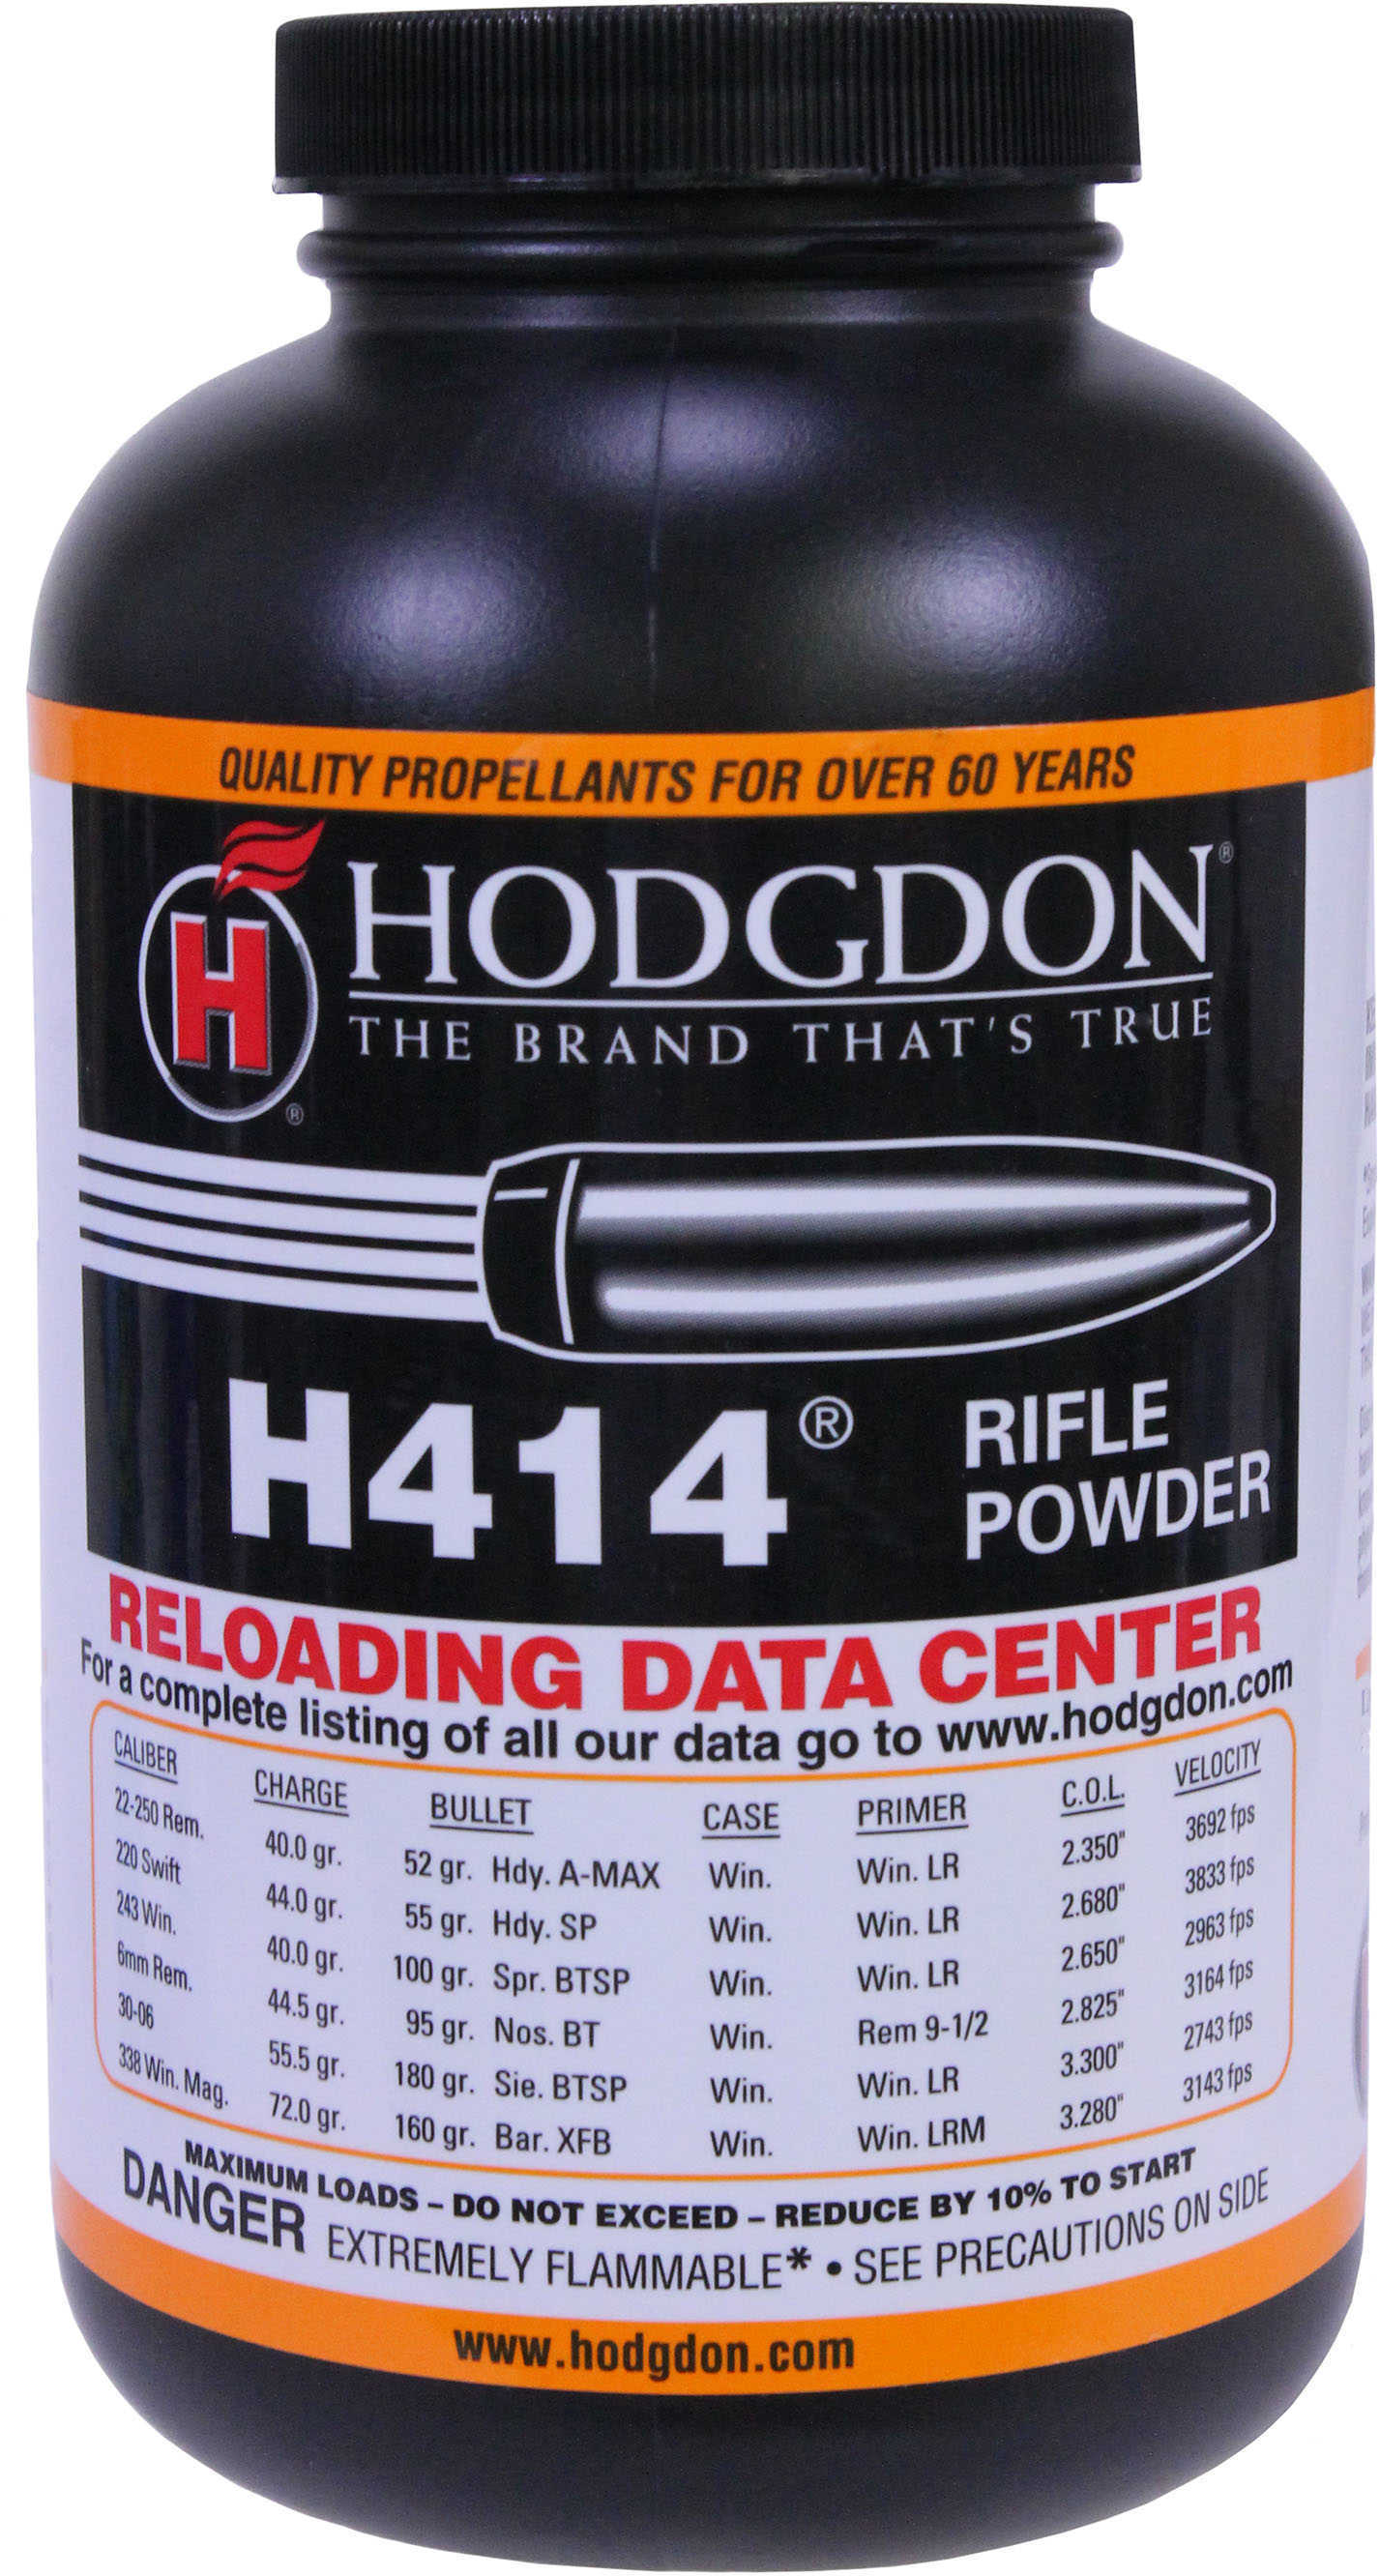 Hodgdon Powder H414 Smokeless 1 Lb